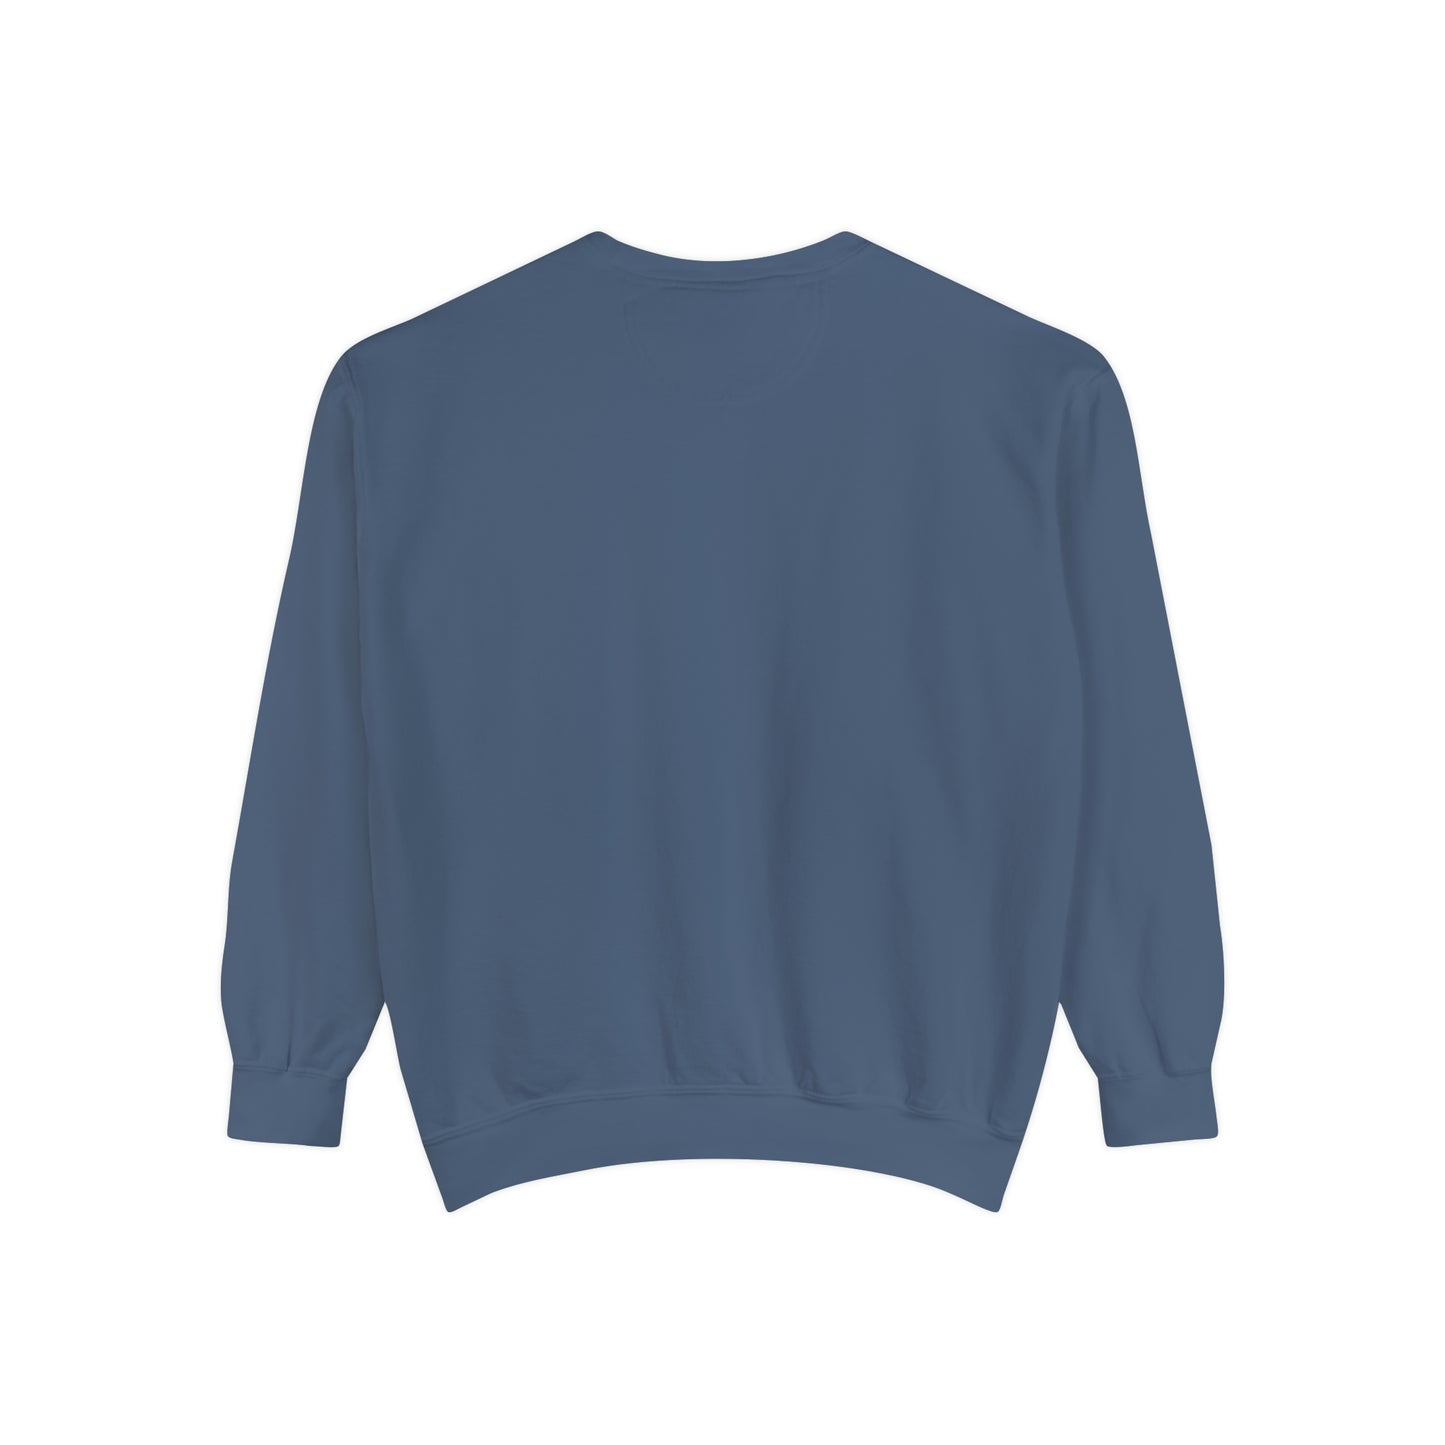 Chichis Sudadera Unisex Garment-Dyed Sweatshirt